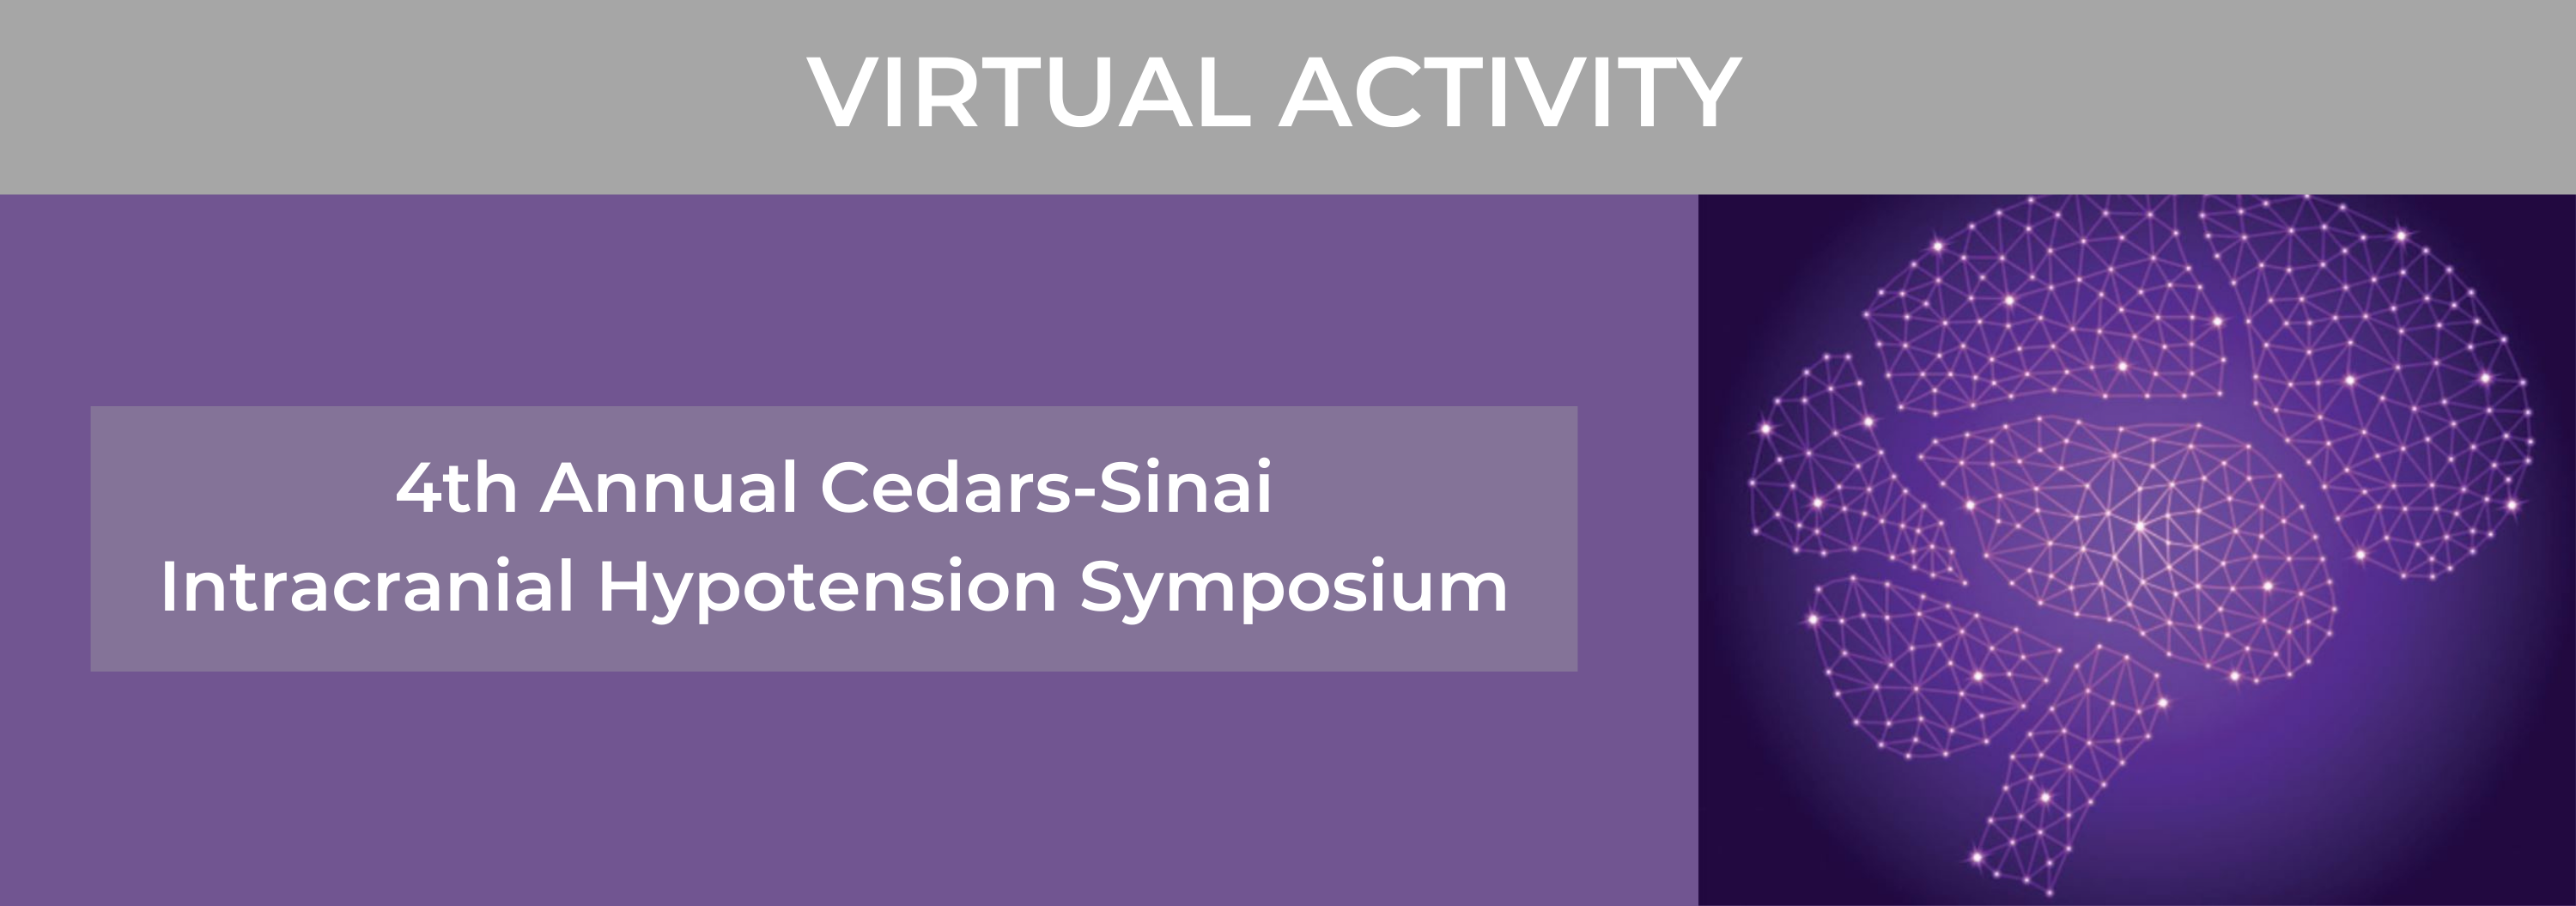 4th Annual Cedars-Sinai Intracranial Hypotension Symposium Banner